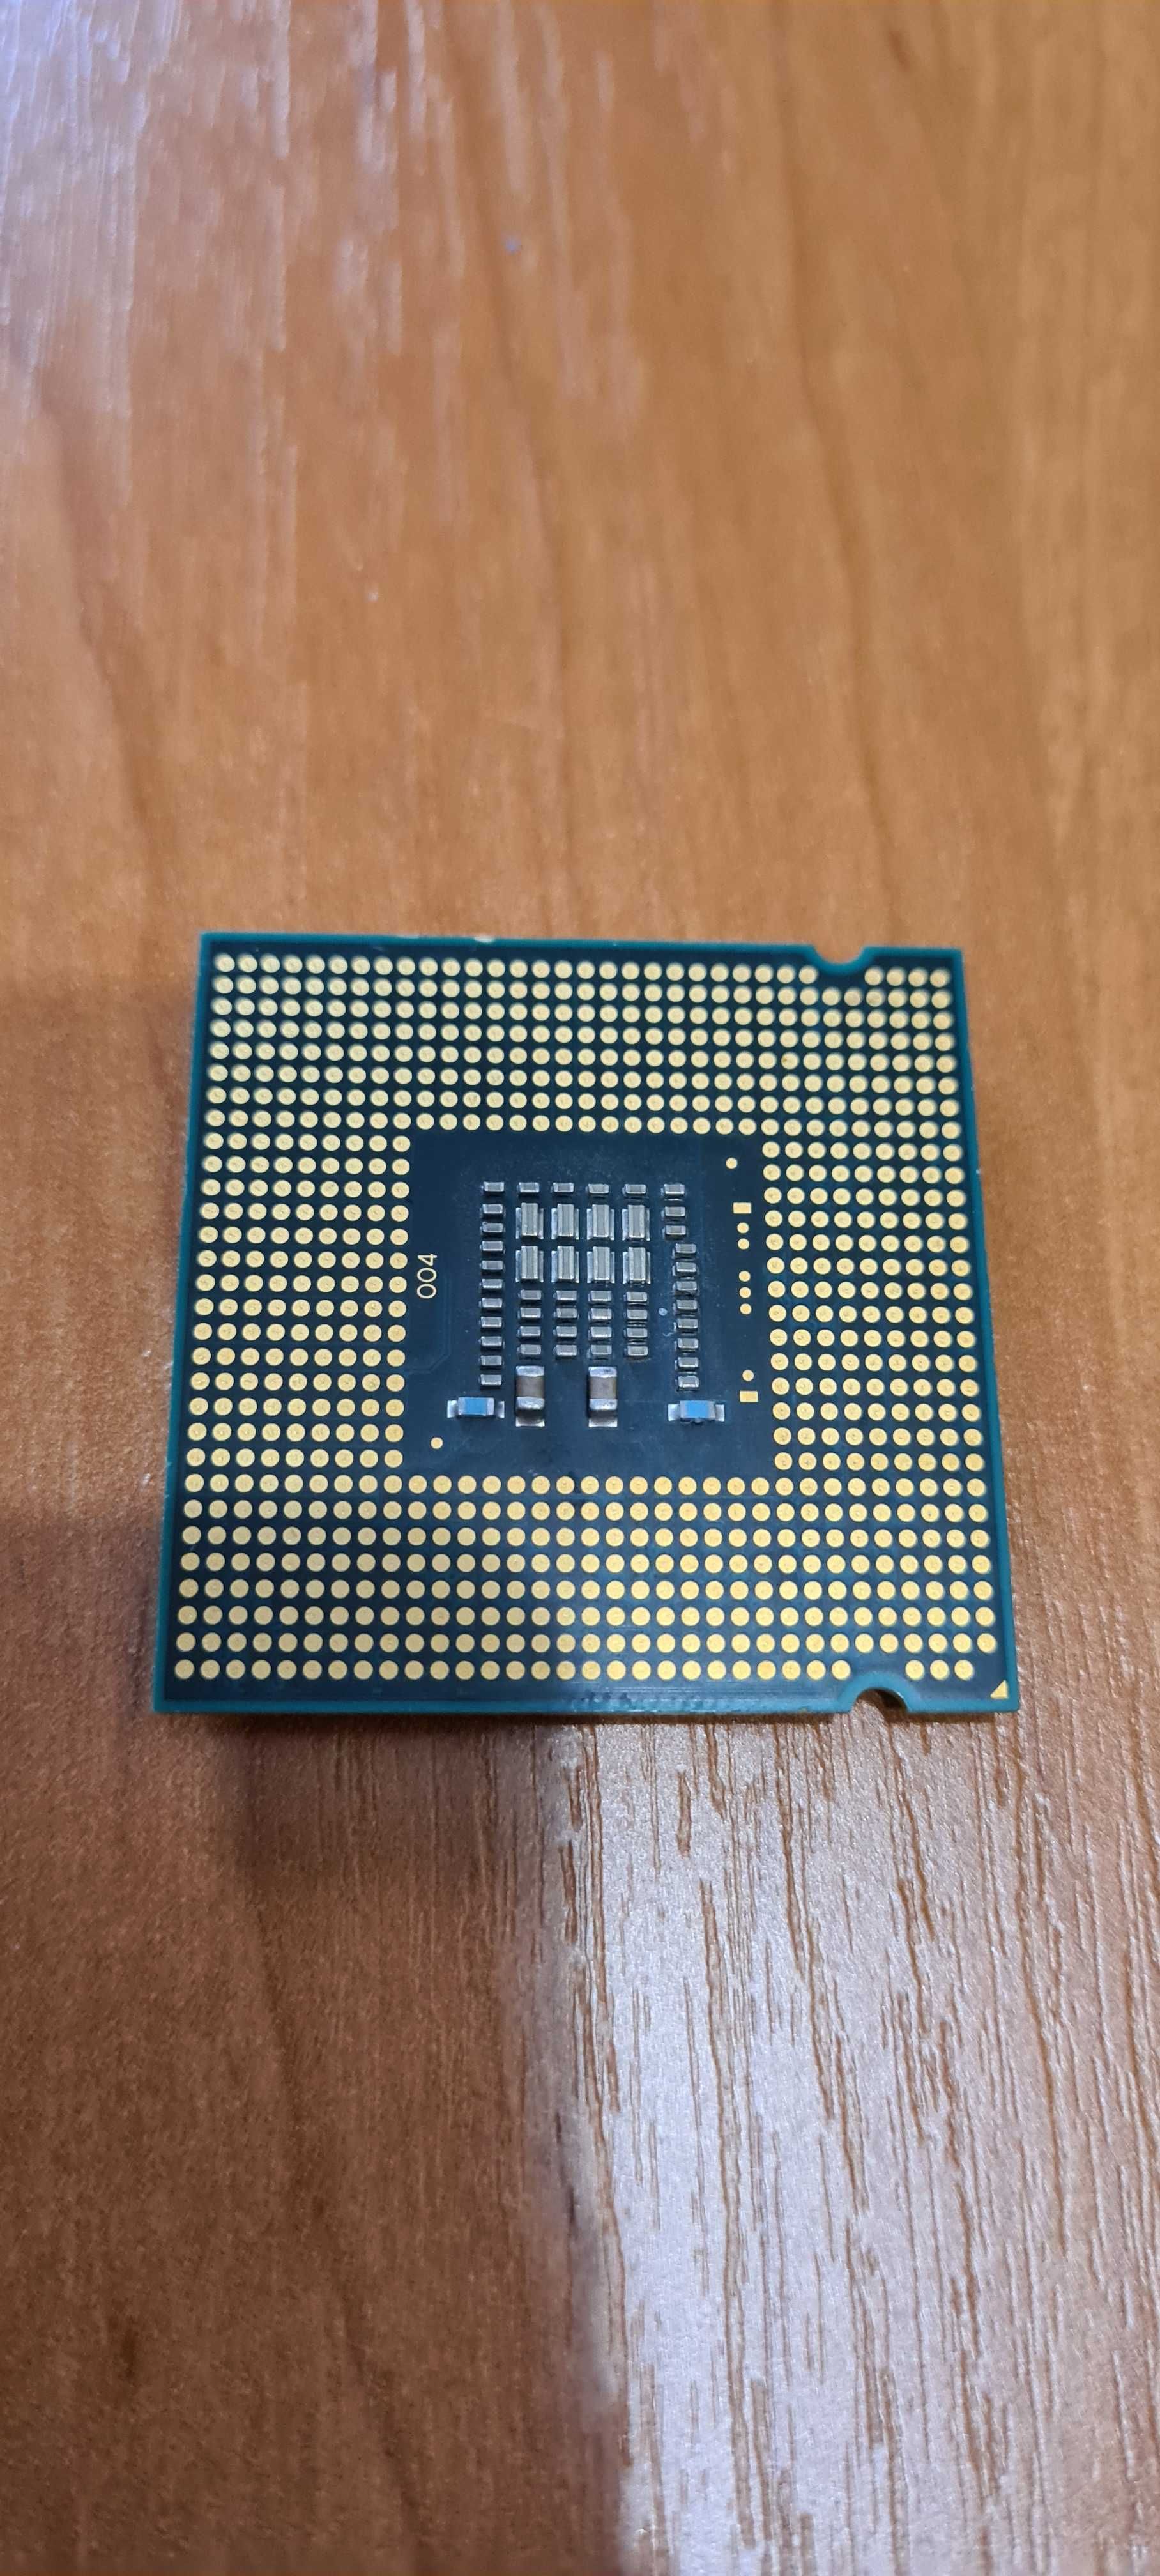 Procesor Intel Pentium Dual Core E5200 Używany